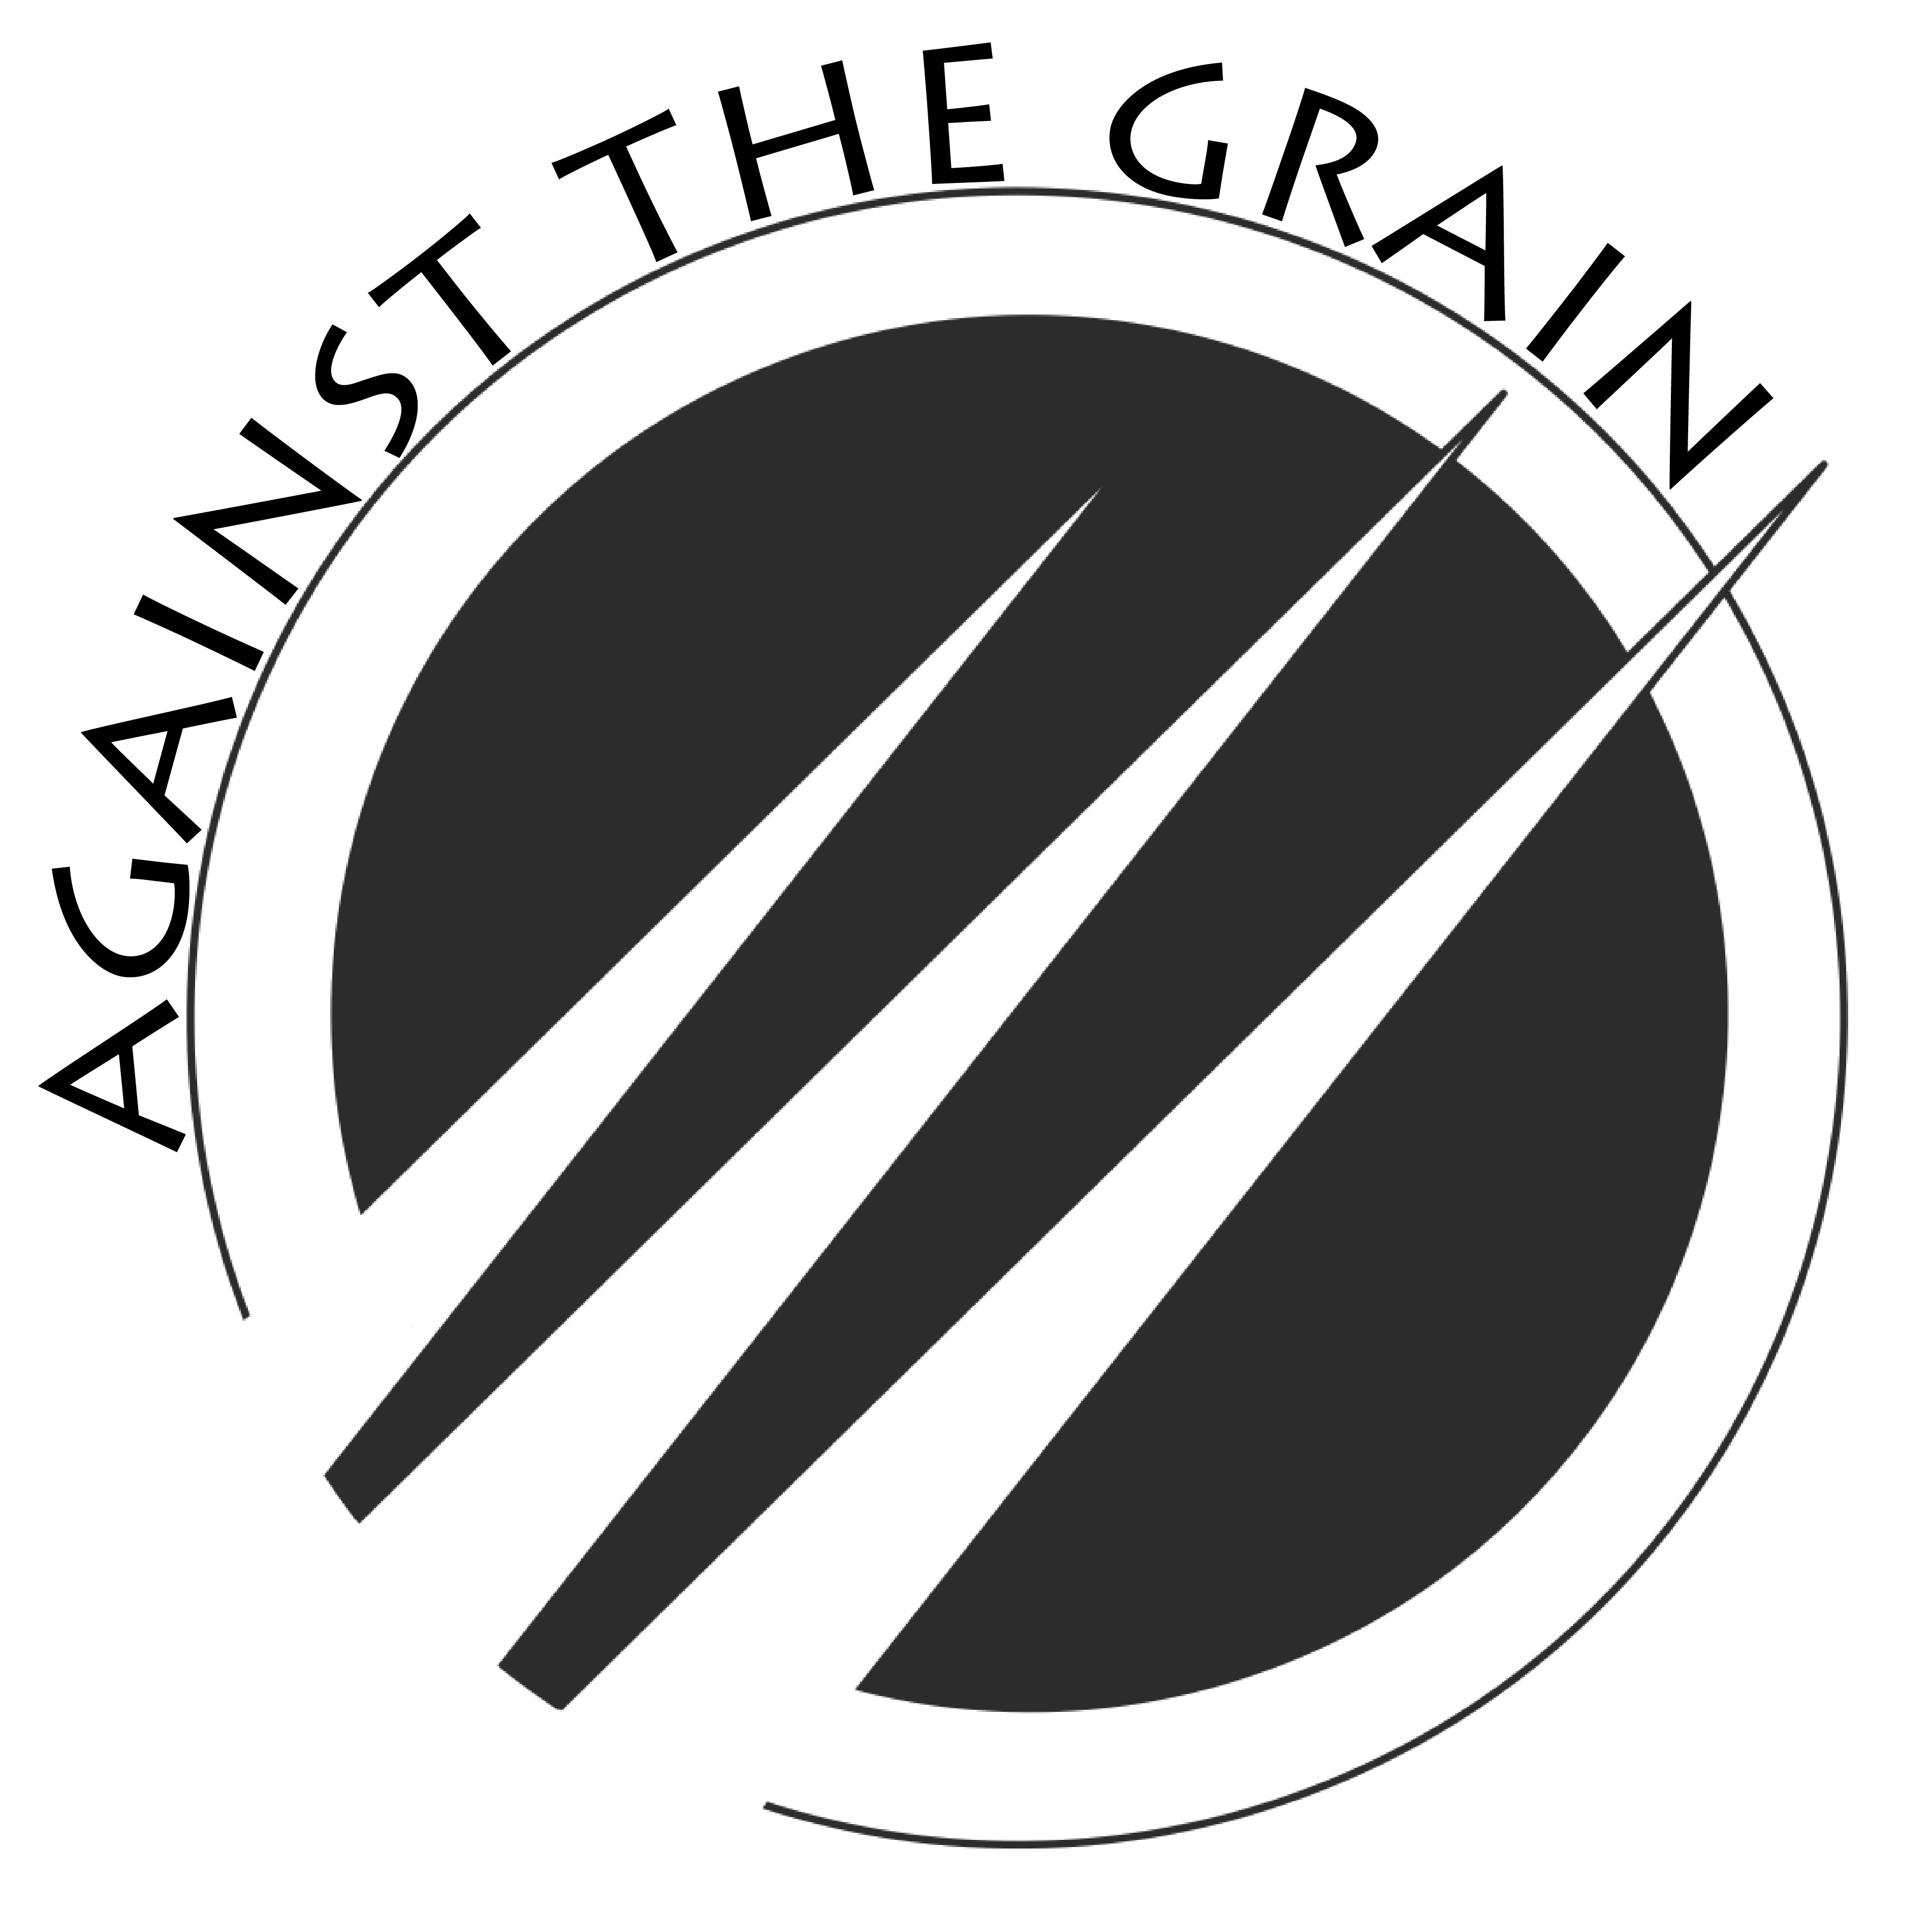 Against the Grain Poetry Press